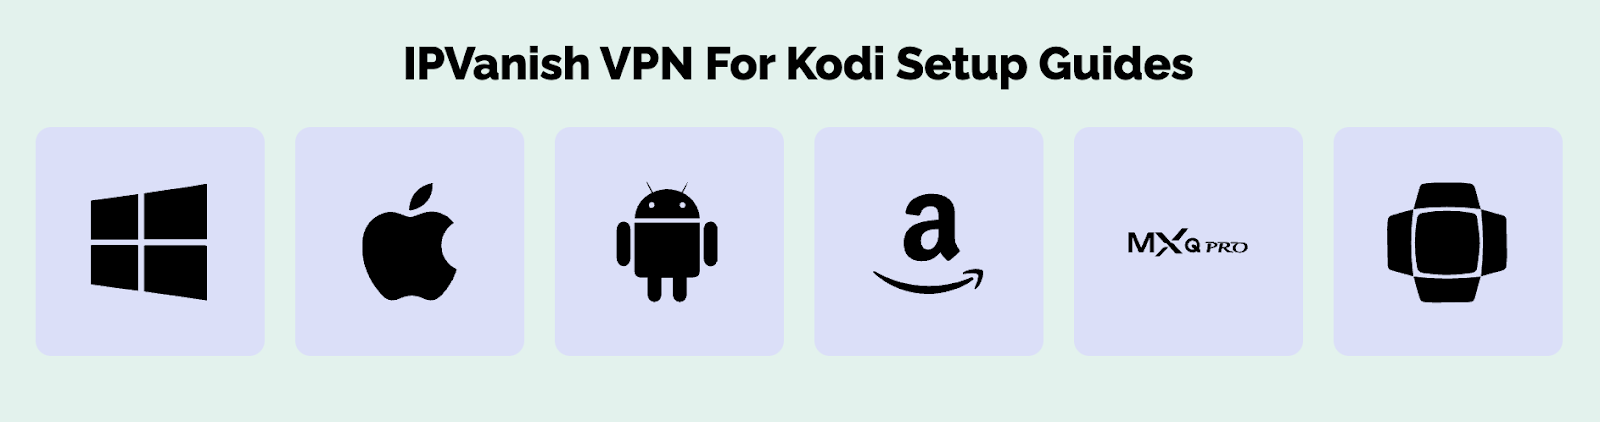 IPVanish Kodi setup guides list